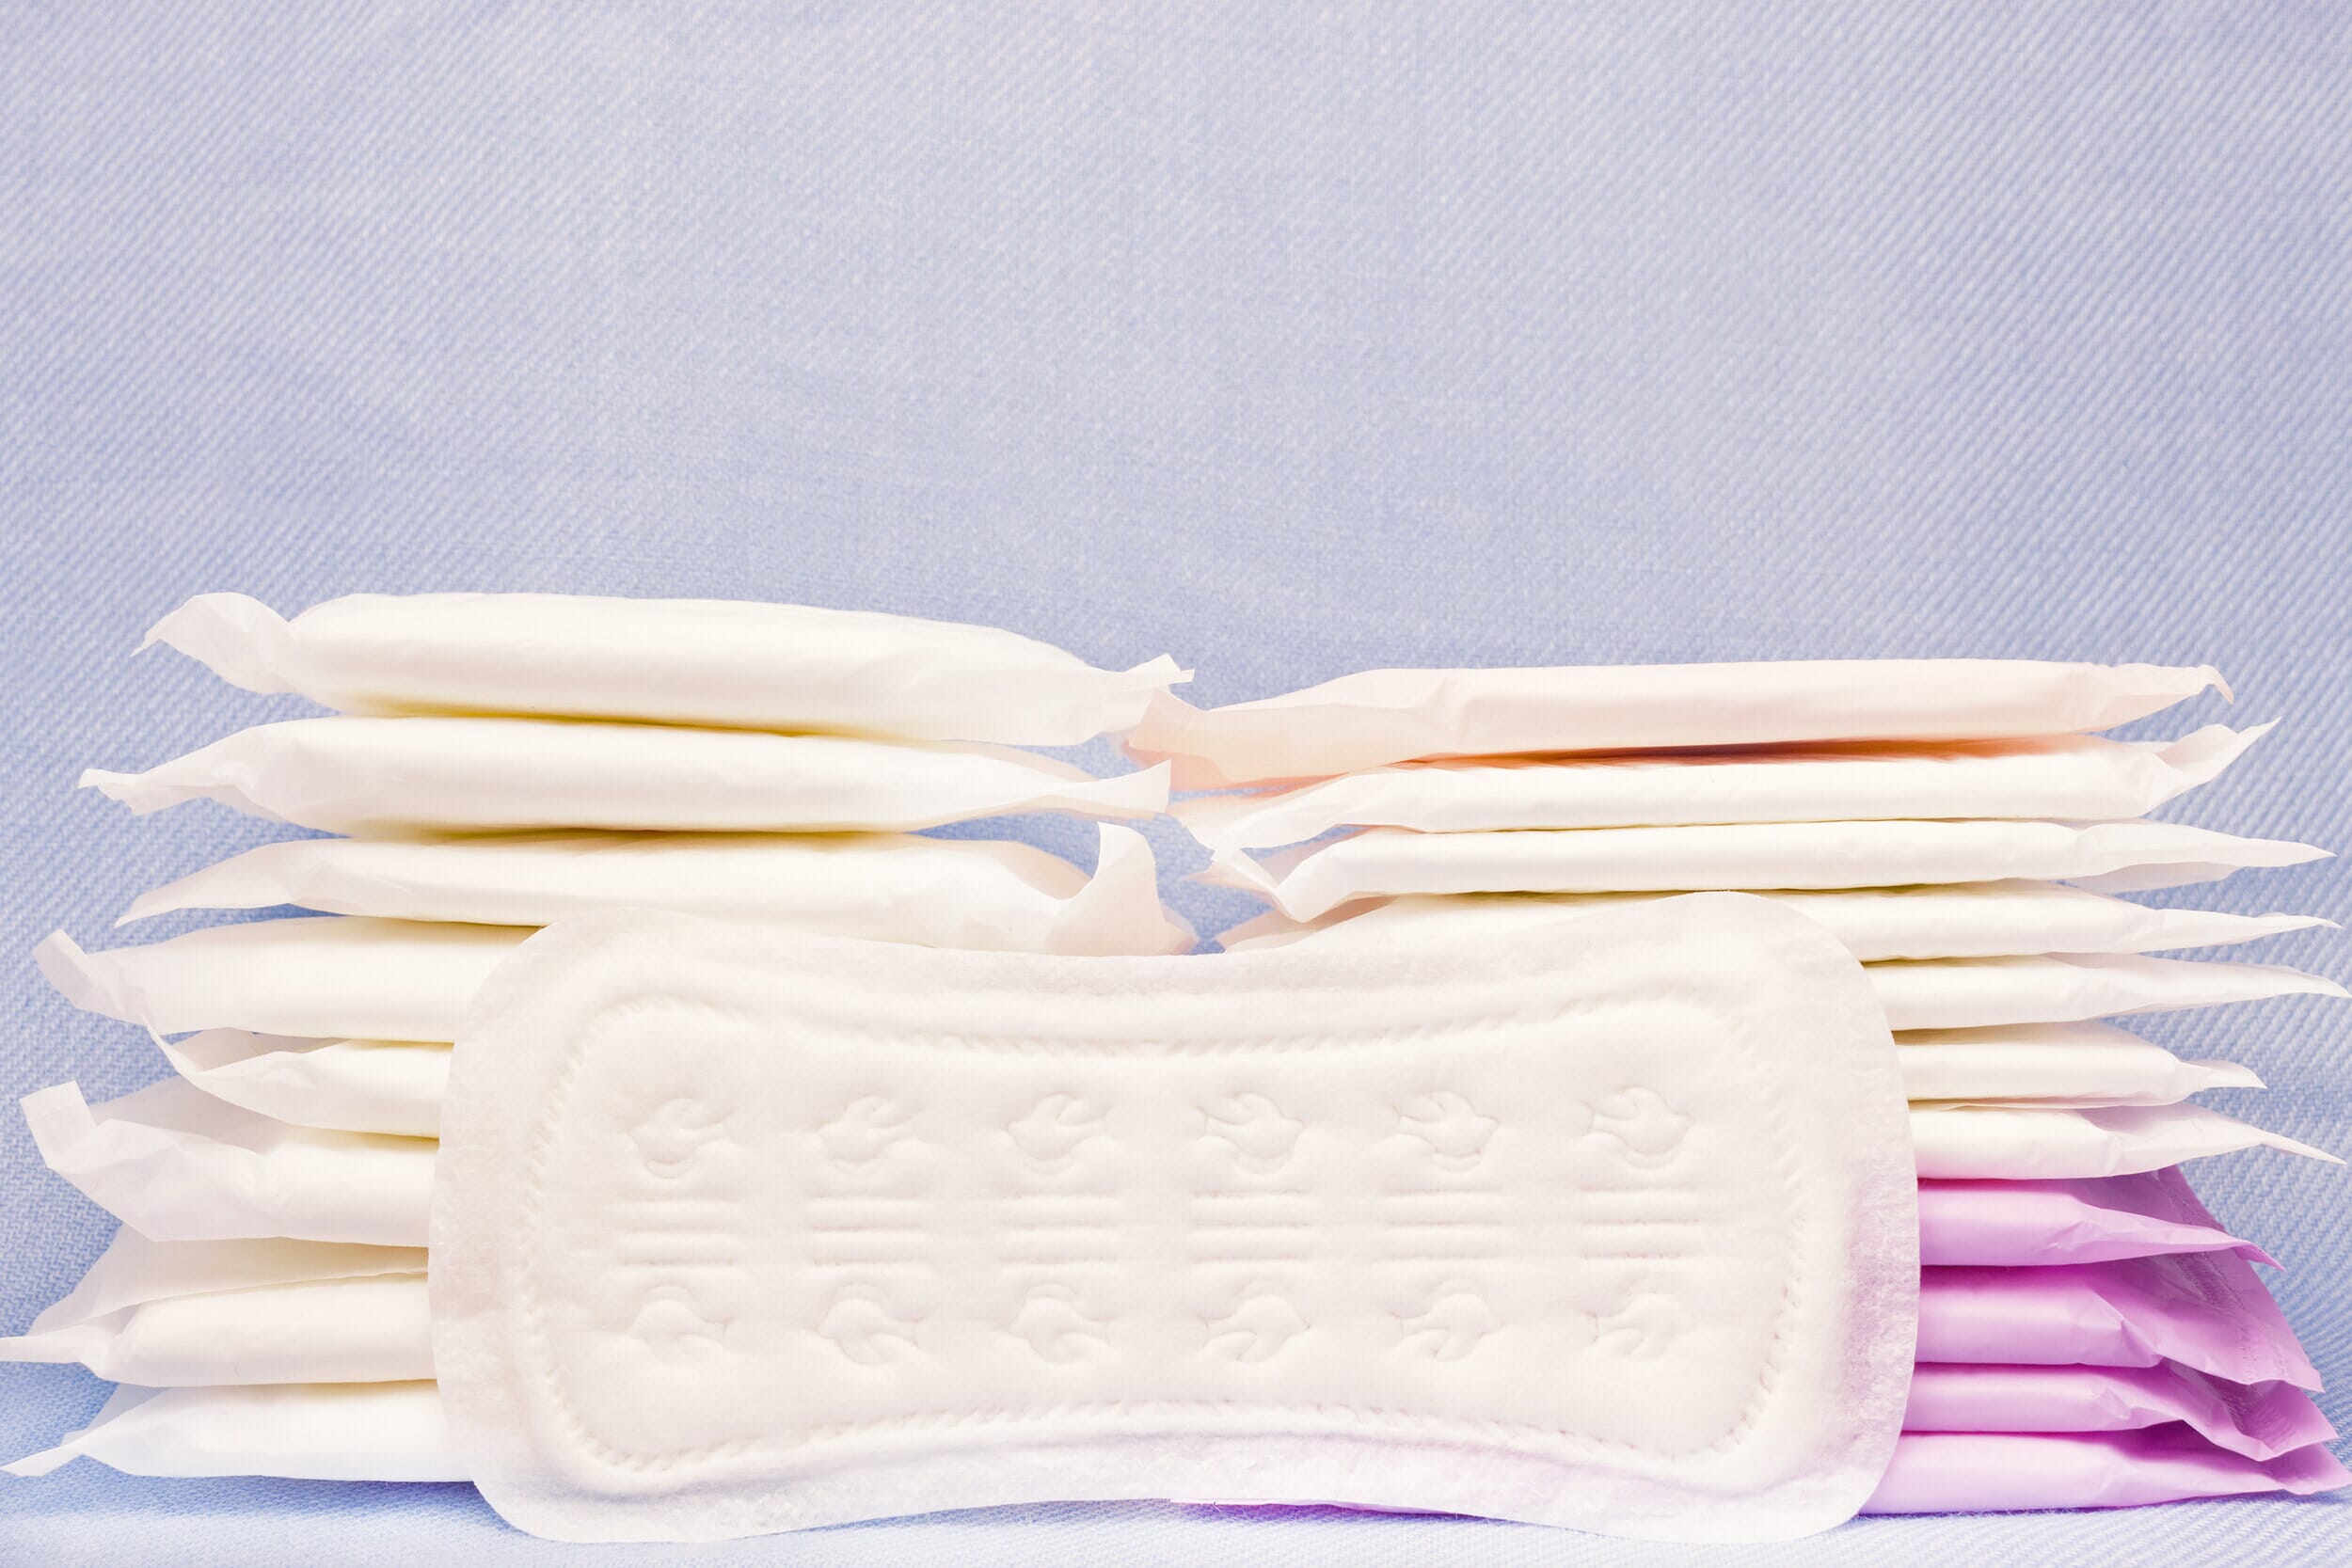 stack of pads or feminine napkins